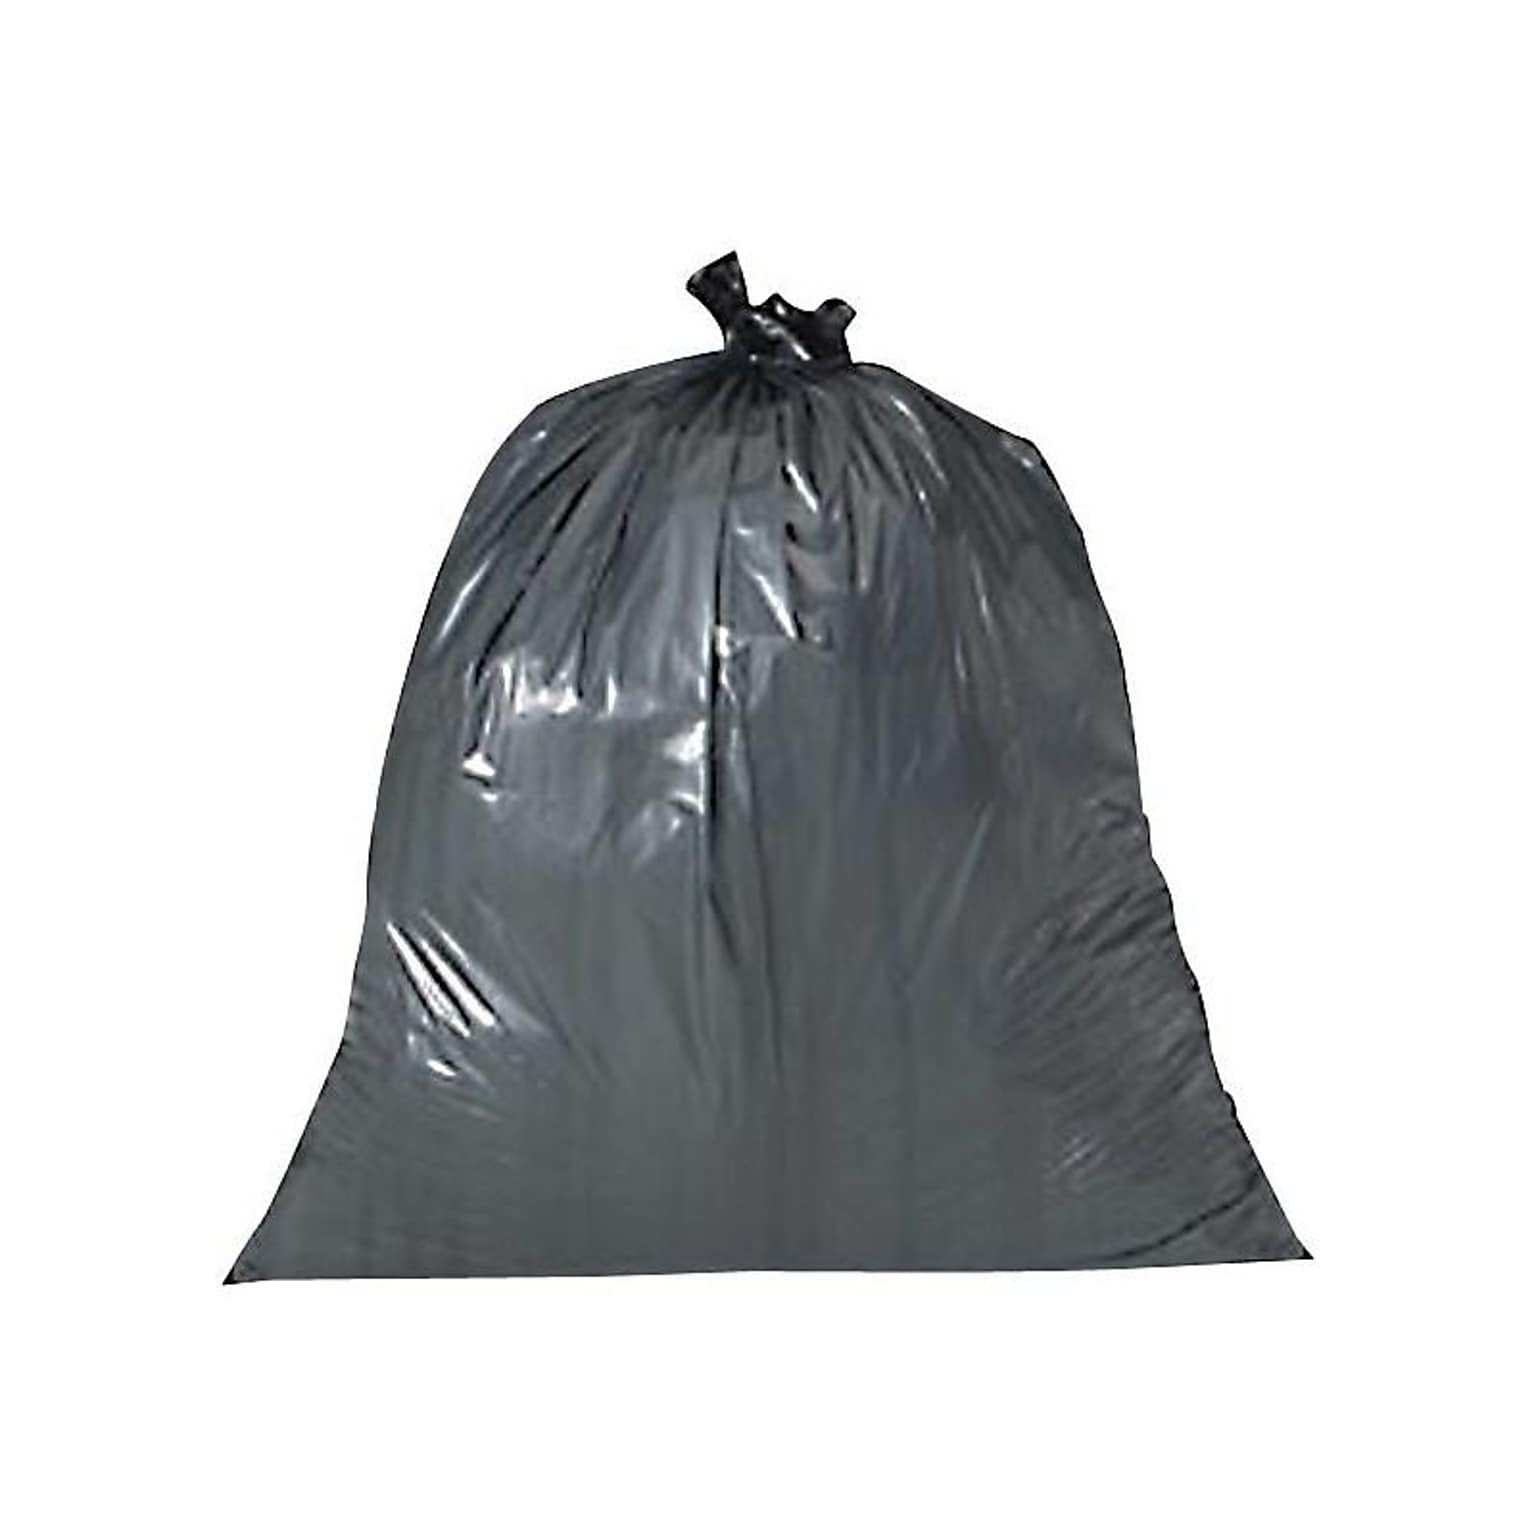 Heritage 60 Gallon Industrial Trash Bag, 44 x 56, Low Density, 1.2 Mil, Charcoal, 100 Bags/Box (H8856SH)